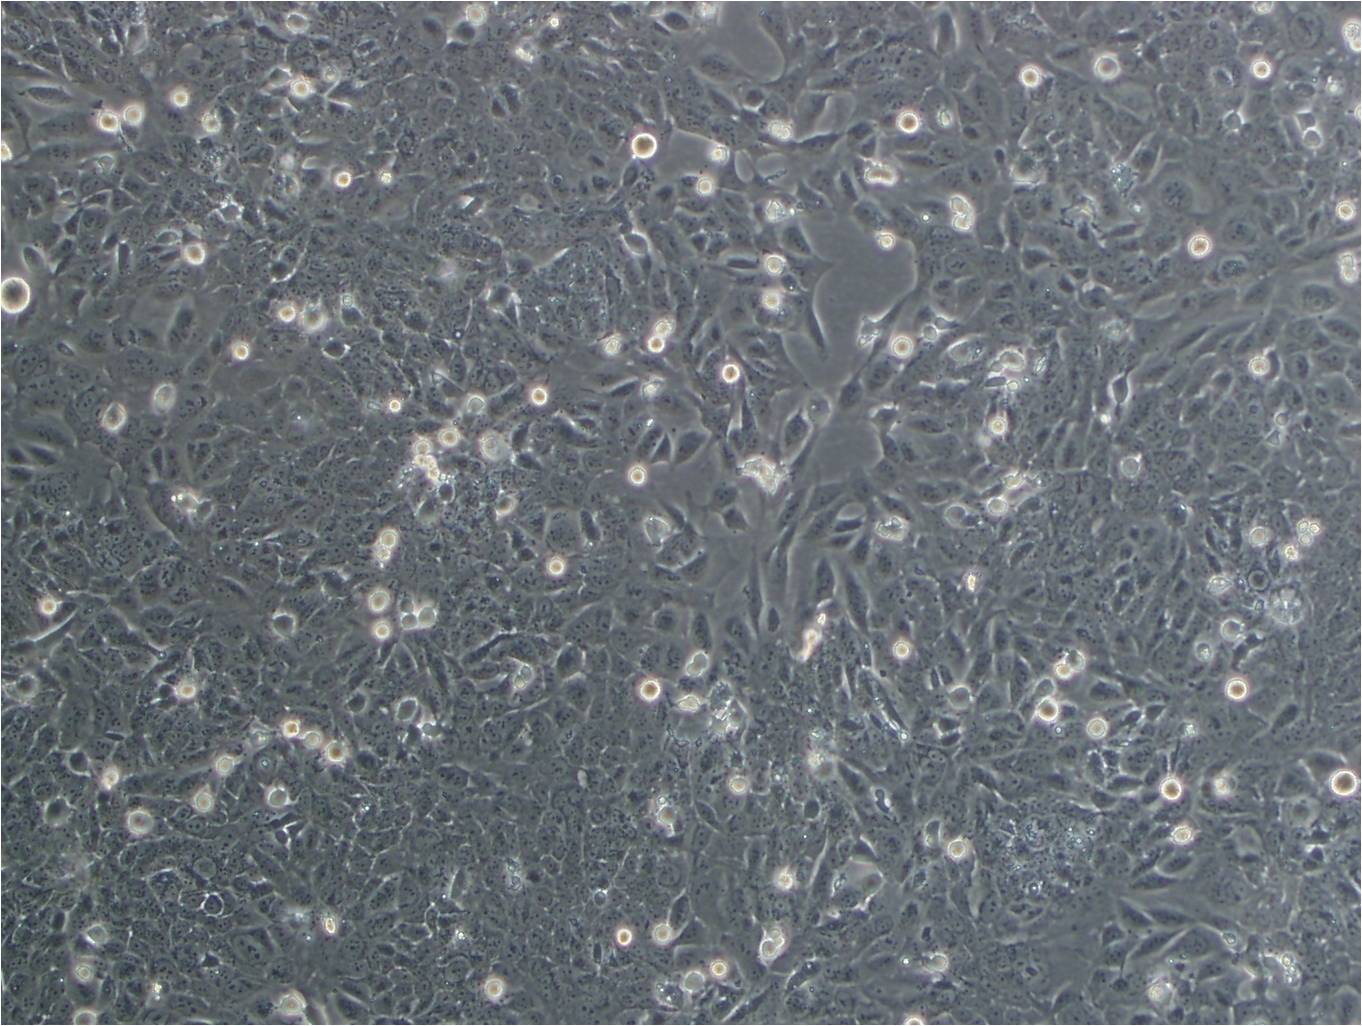 SNU-719 cell line人胃癌细胞系